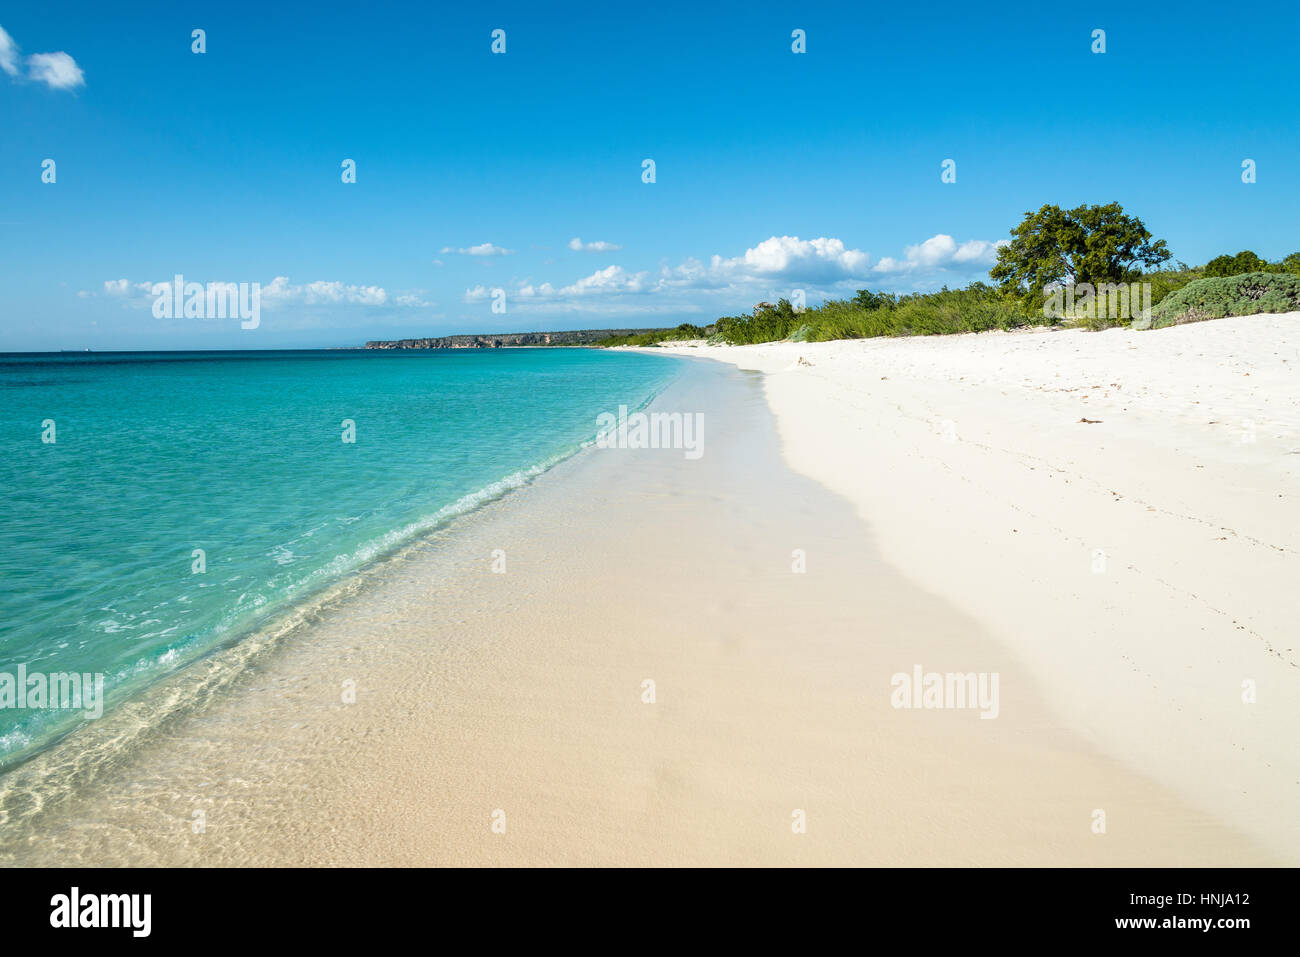 Beach of 'Bahia de las Aguilas', protected National Park, Dominican Republic Stock Photo